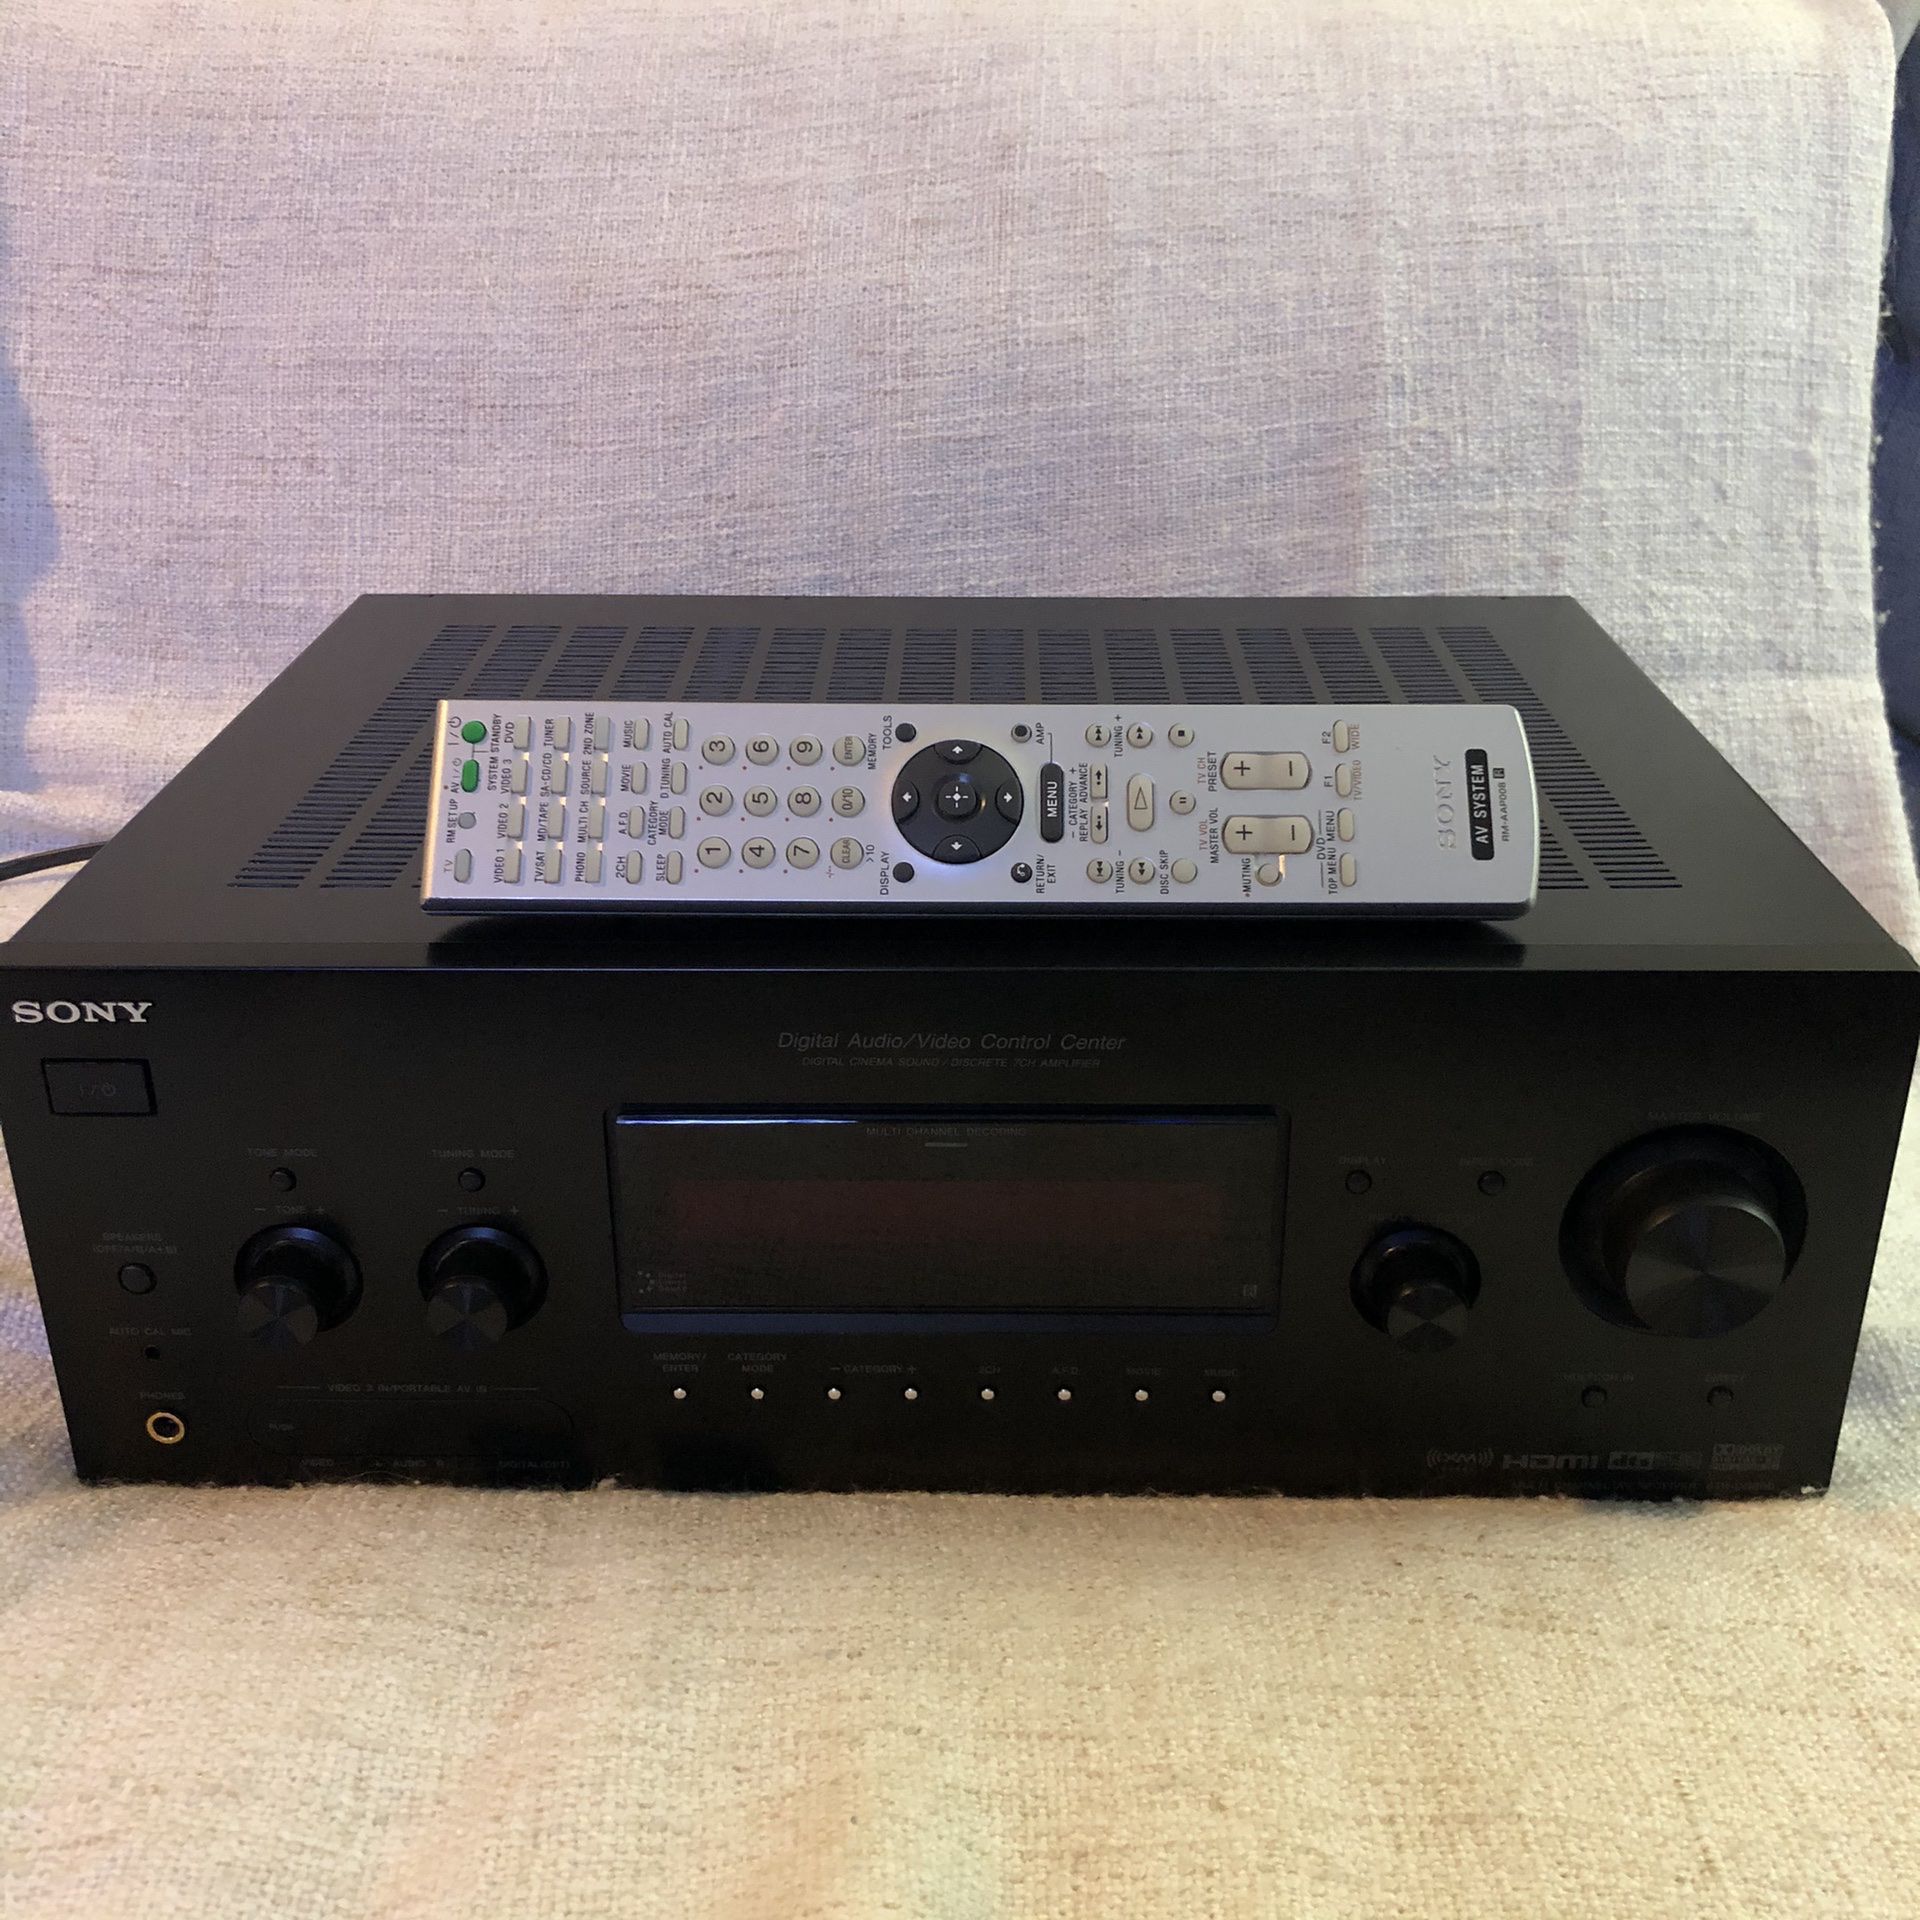 Sony Home Theater AV Receiver & Definitive Surround Sound Speaker System